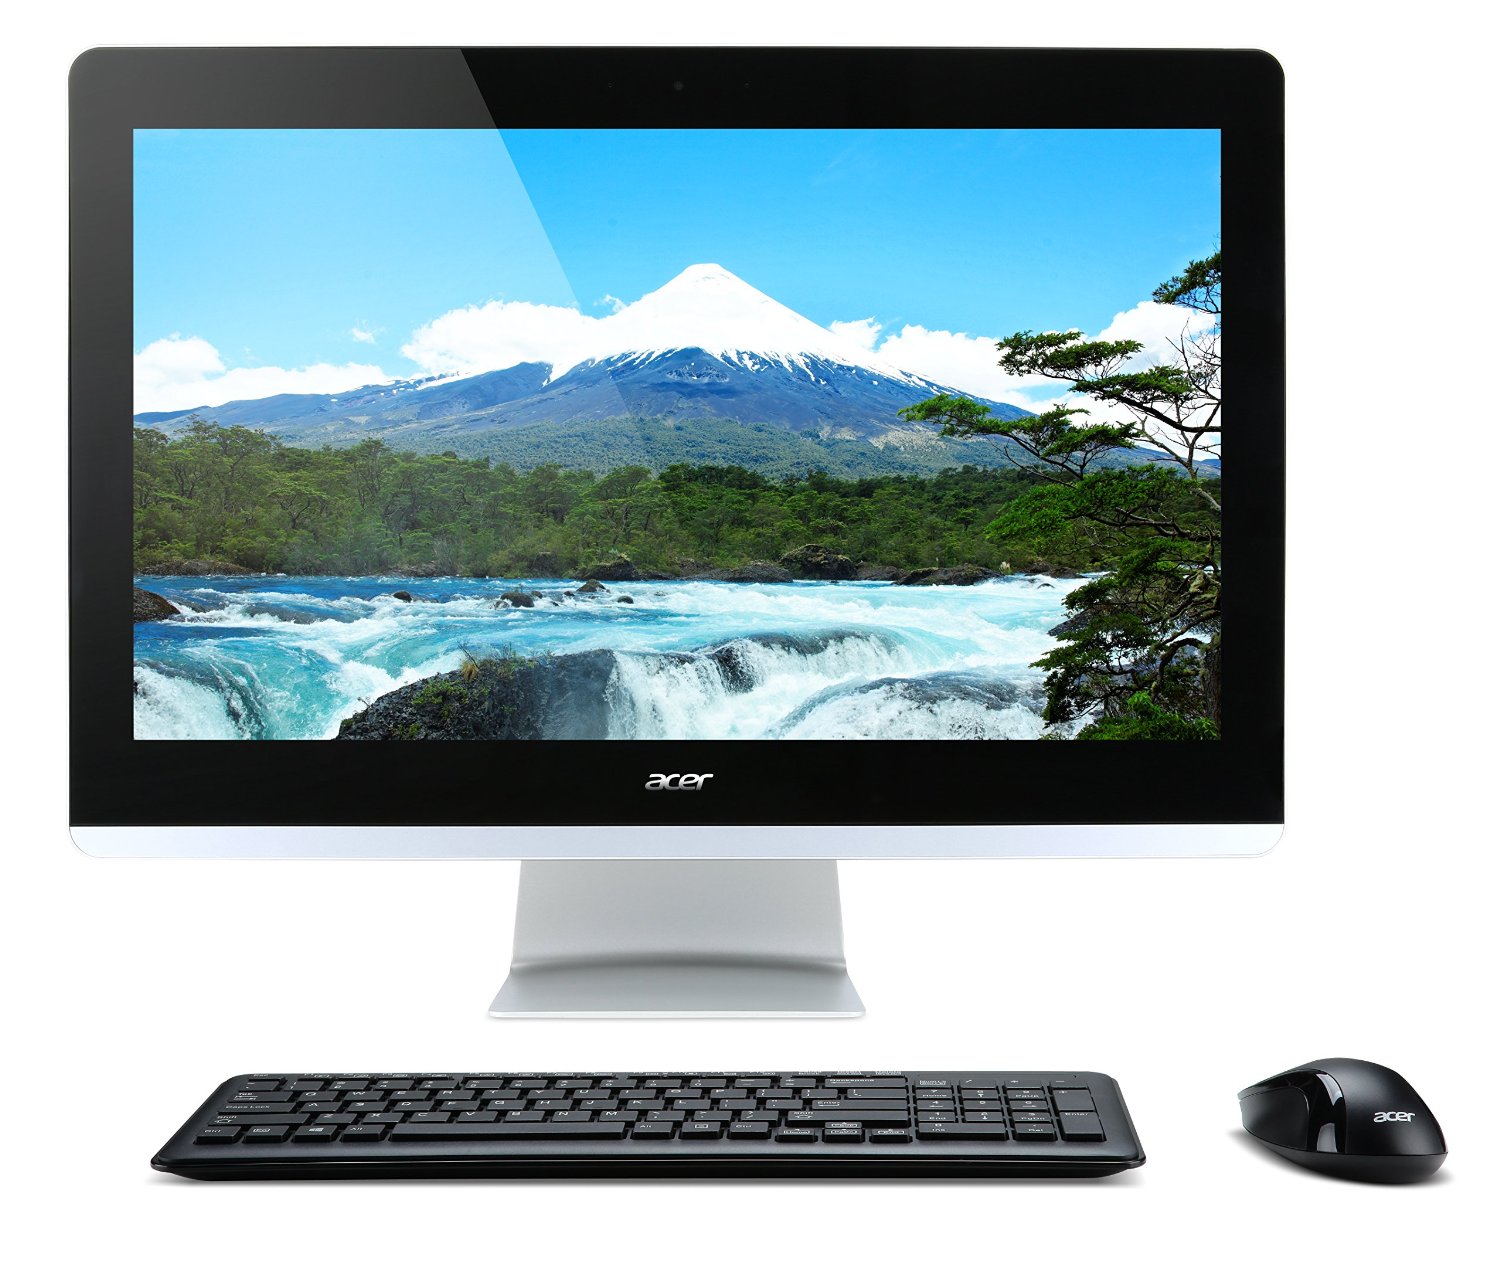 Acer Aspire AZ3-715-UR61 AIO Desktop